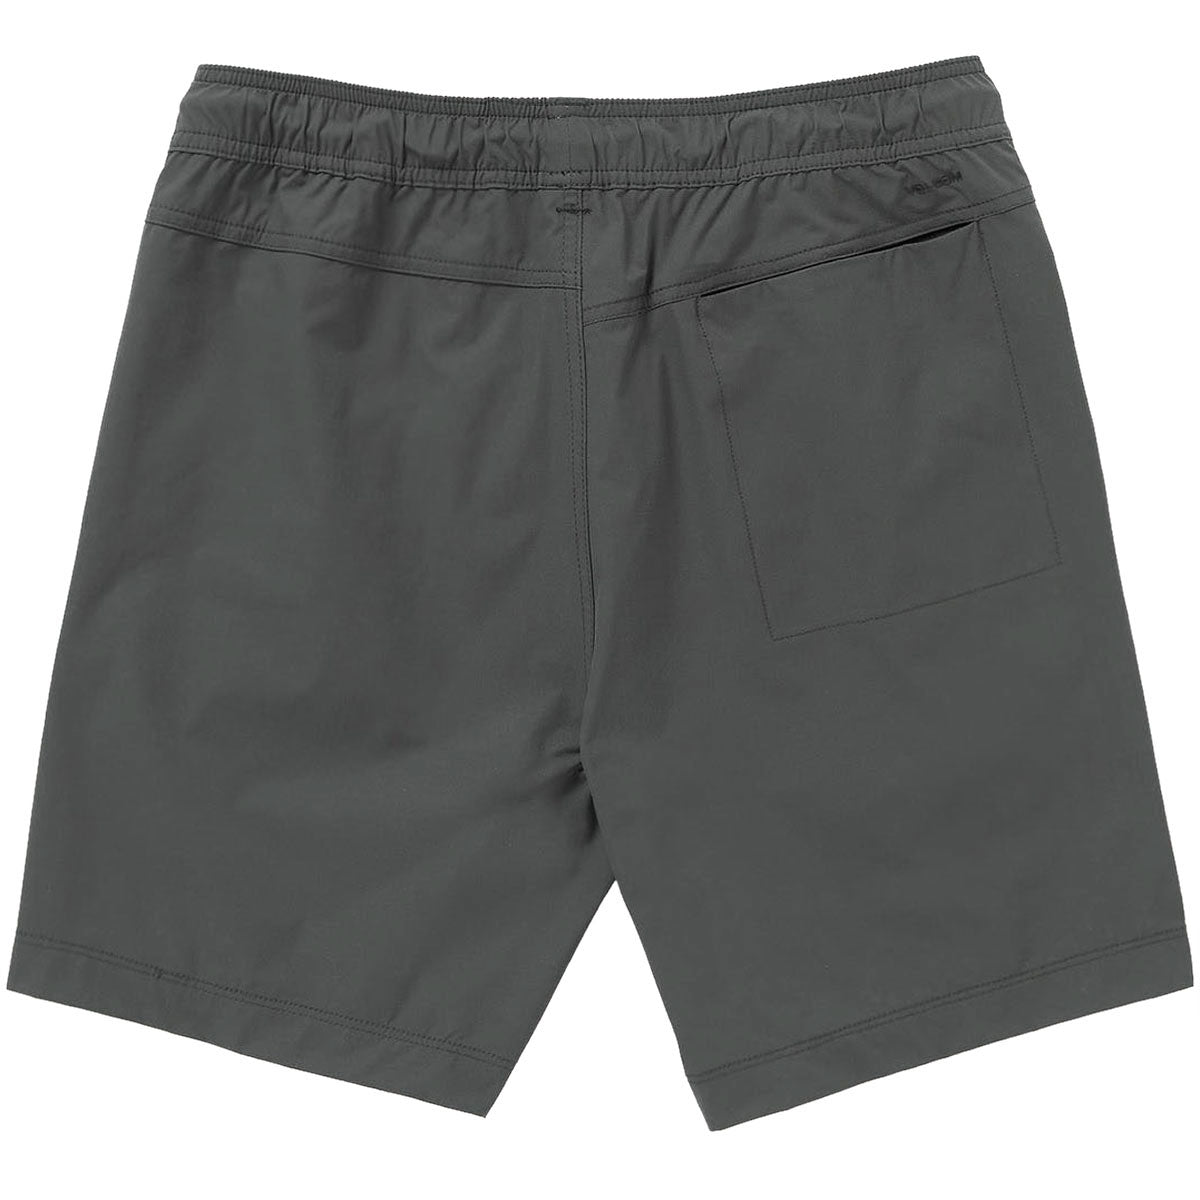 Volcom Hoxstop Ew 18 Shorts - Asphalt Black image 2